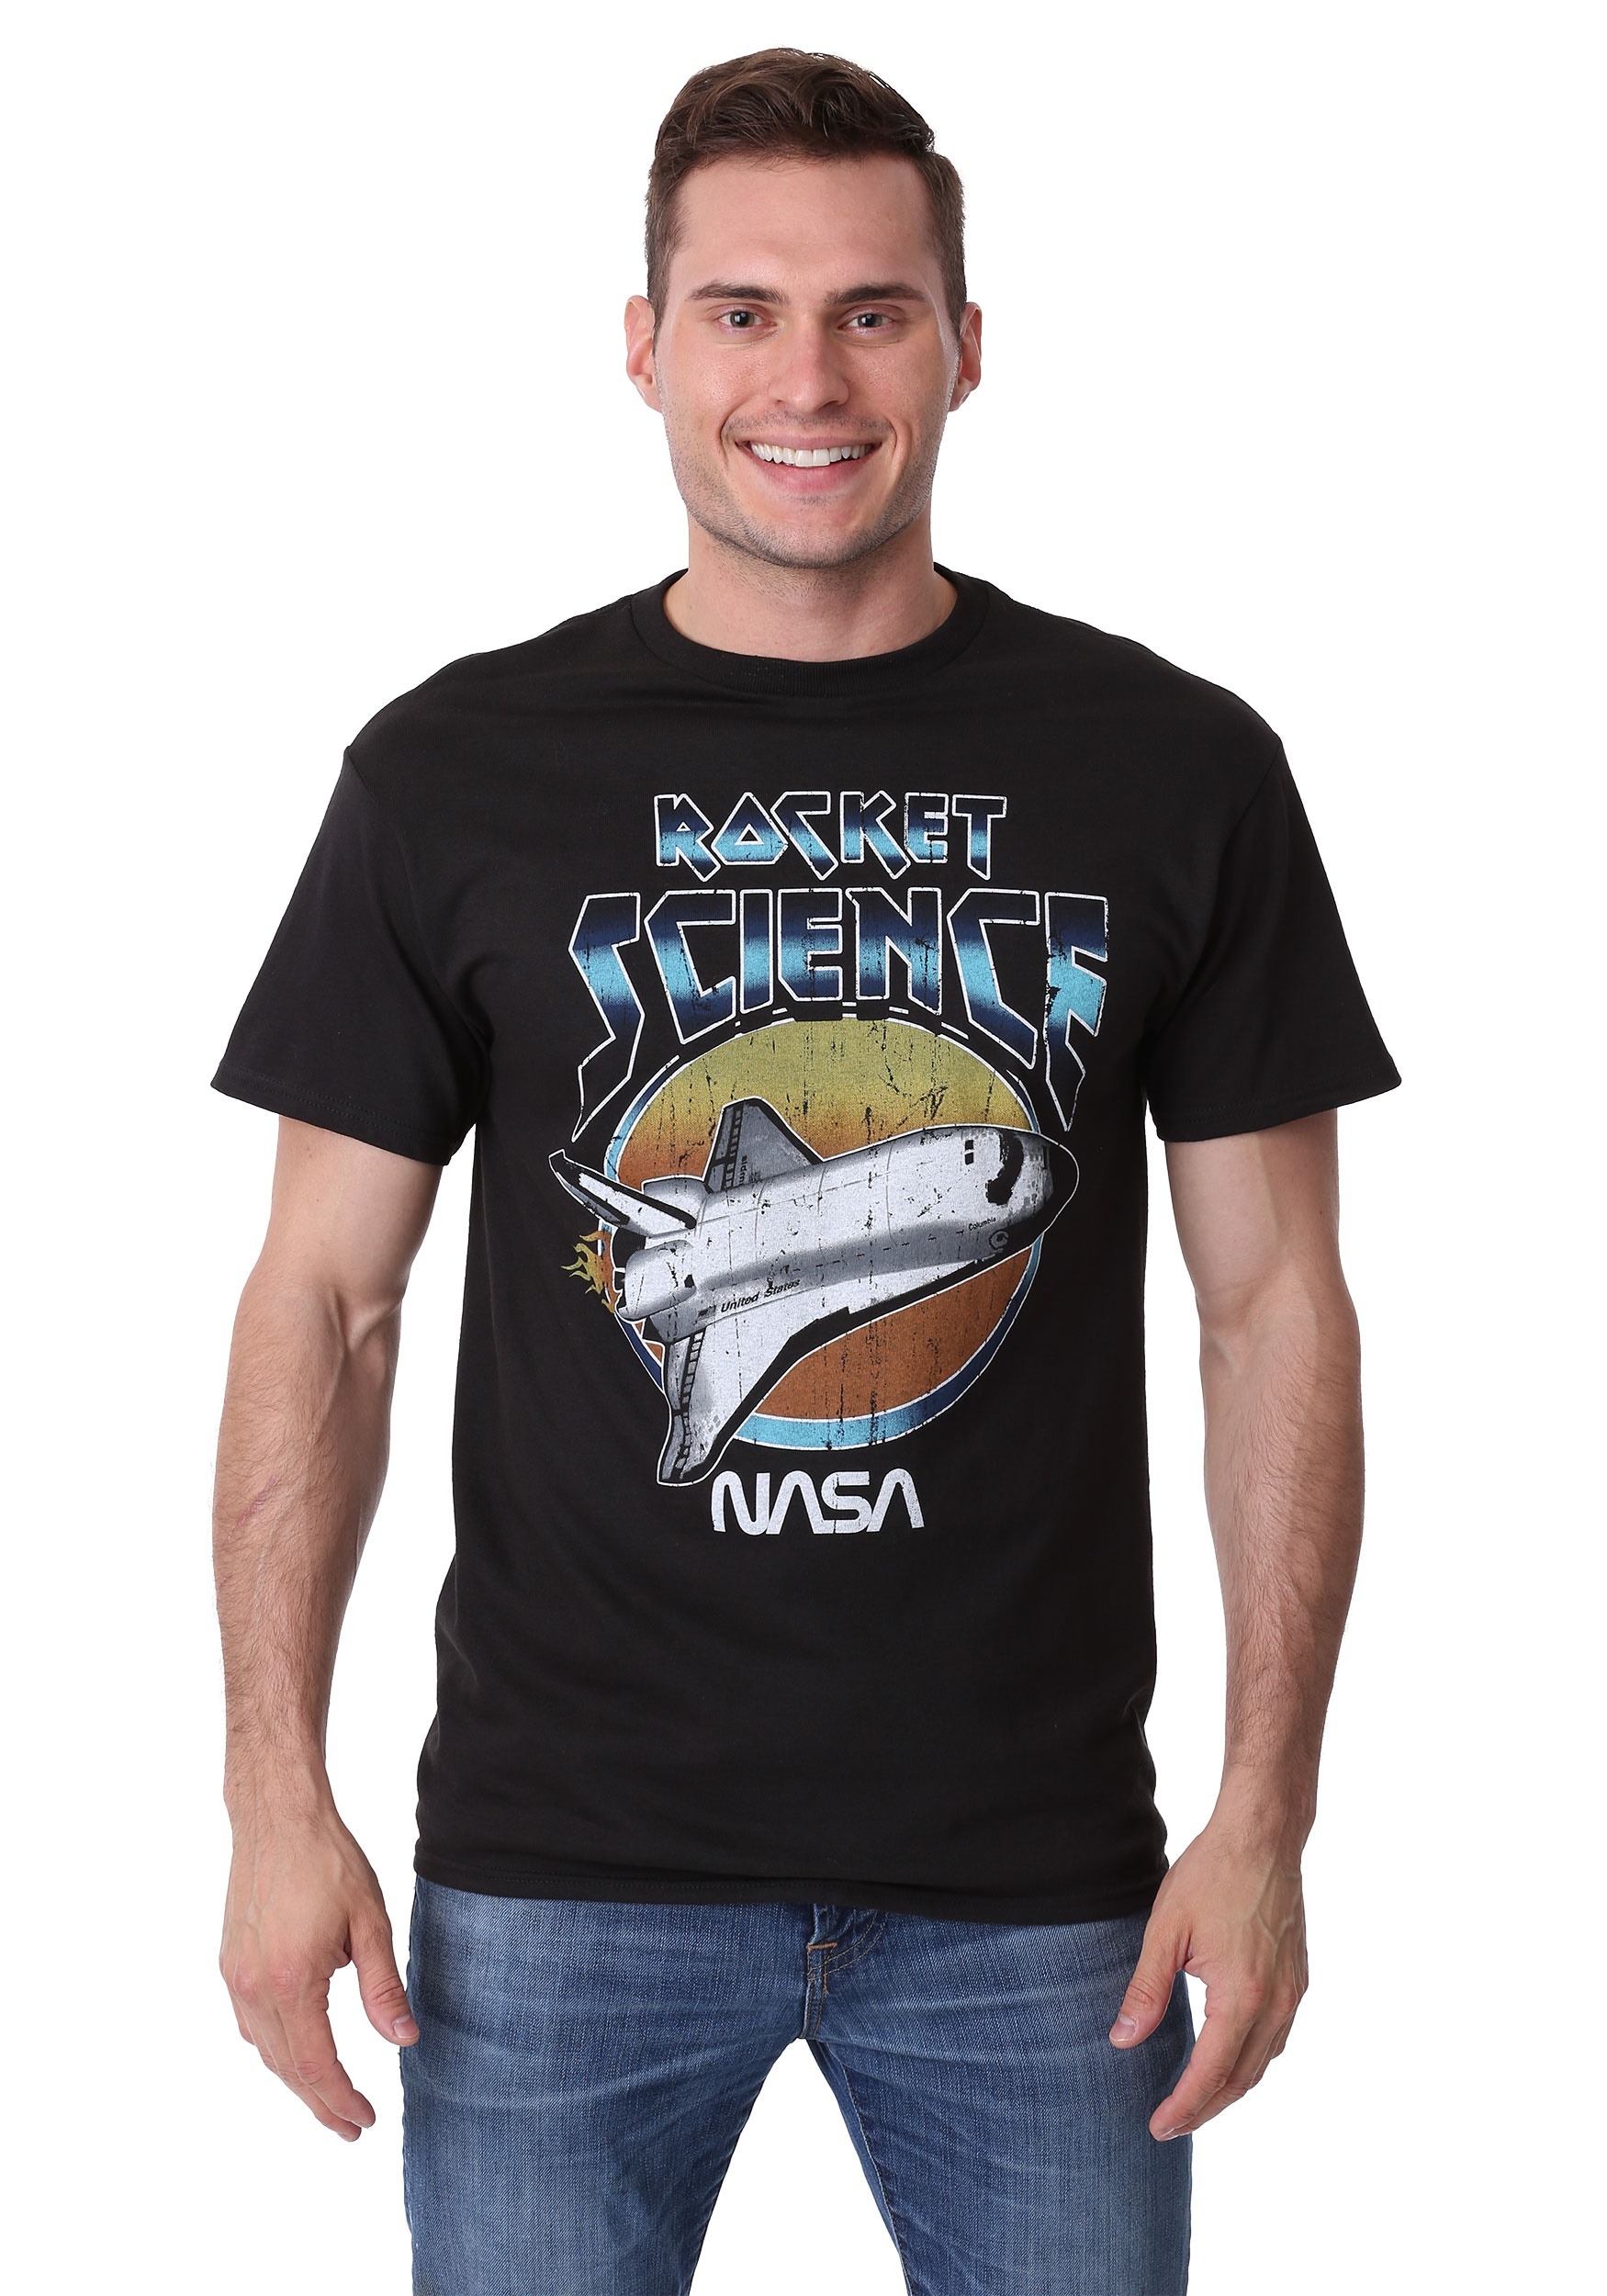 NASA Rocket Science Men's T-Shirt